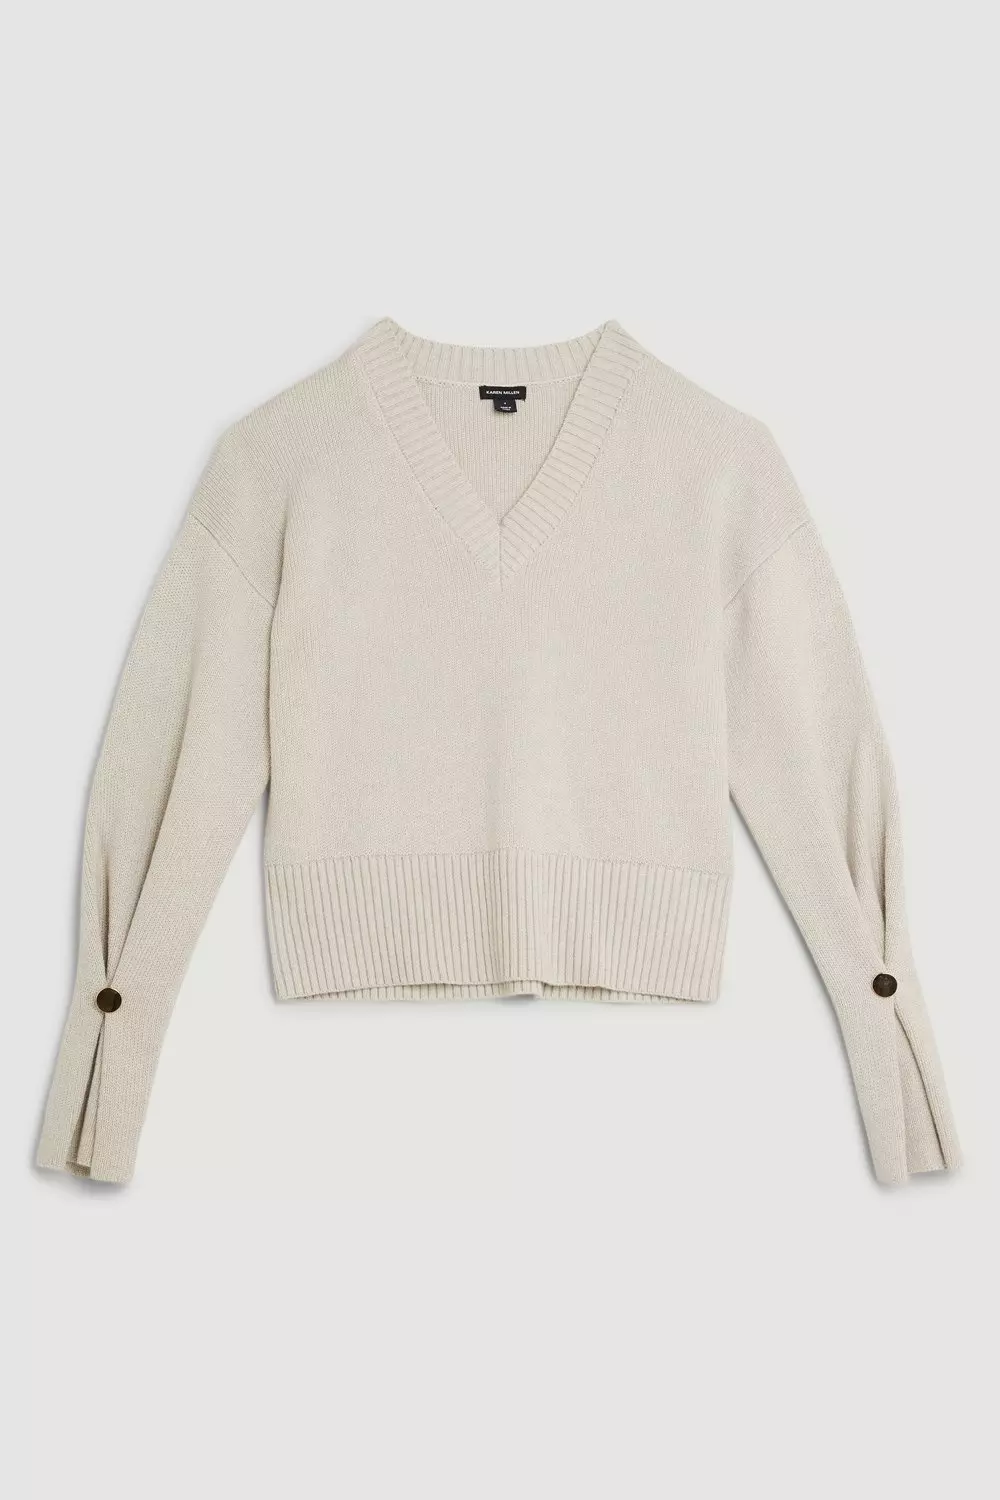 V Neck Premium Alpaca Wool Blend Mid Weight Full Sleeve Knit